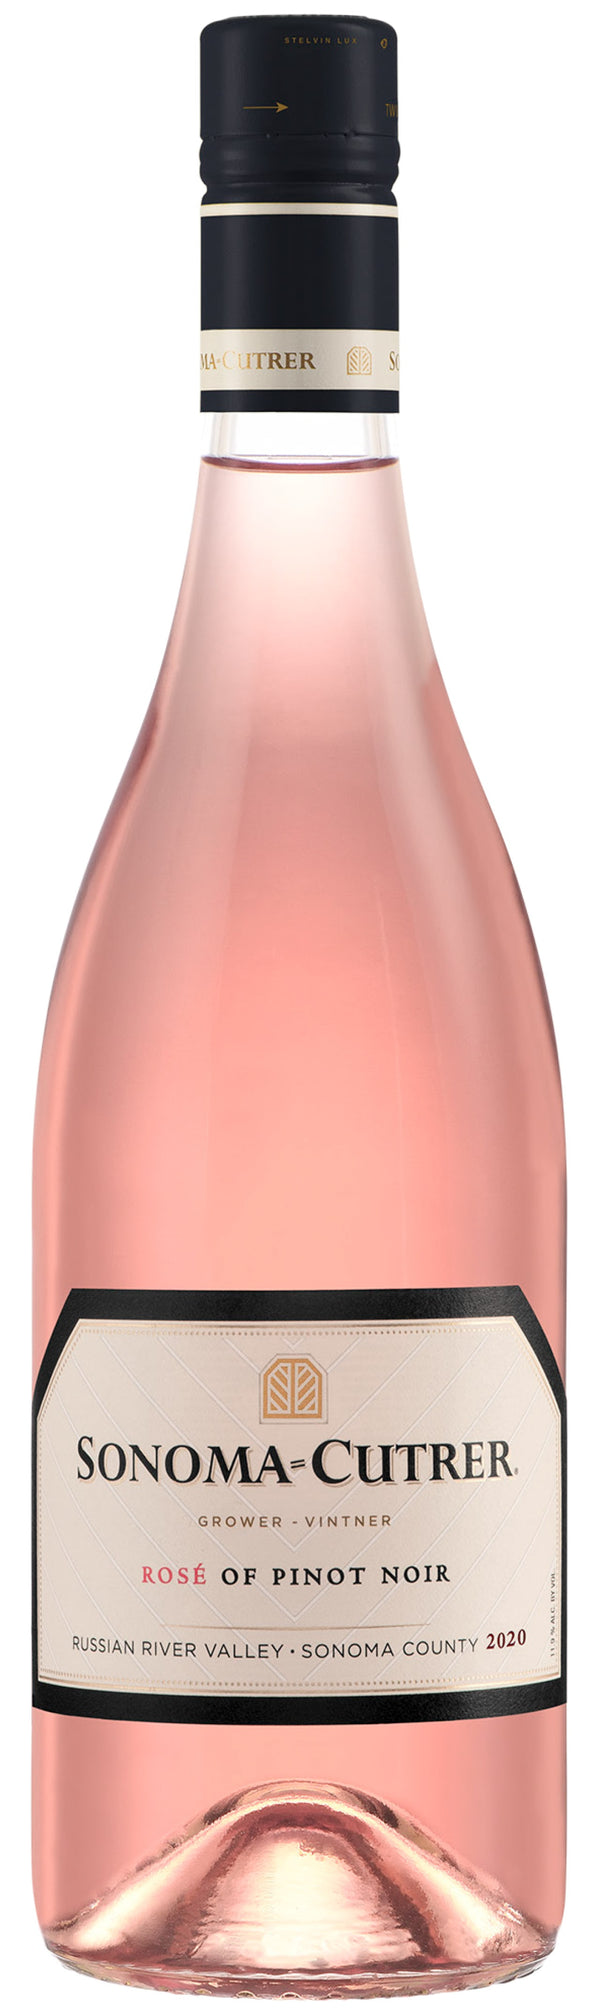 Sonoma-Cutrer Pinot Noir Rose